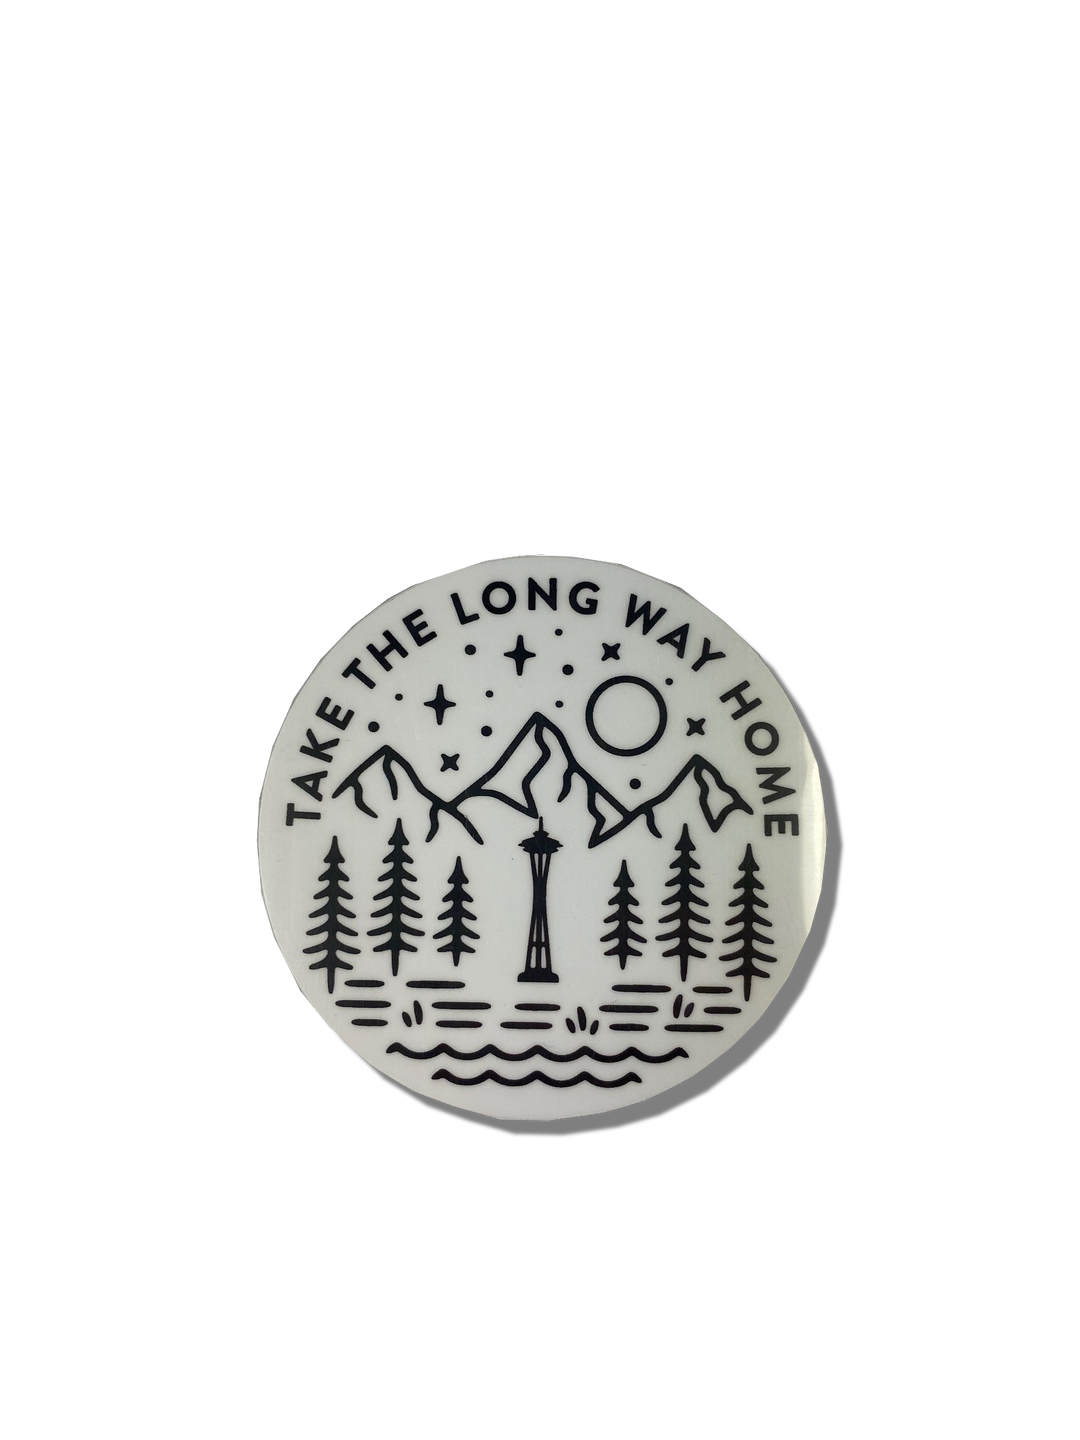 Long Way Home Sticker